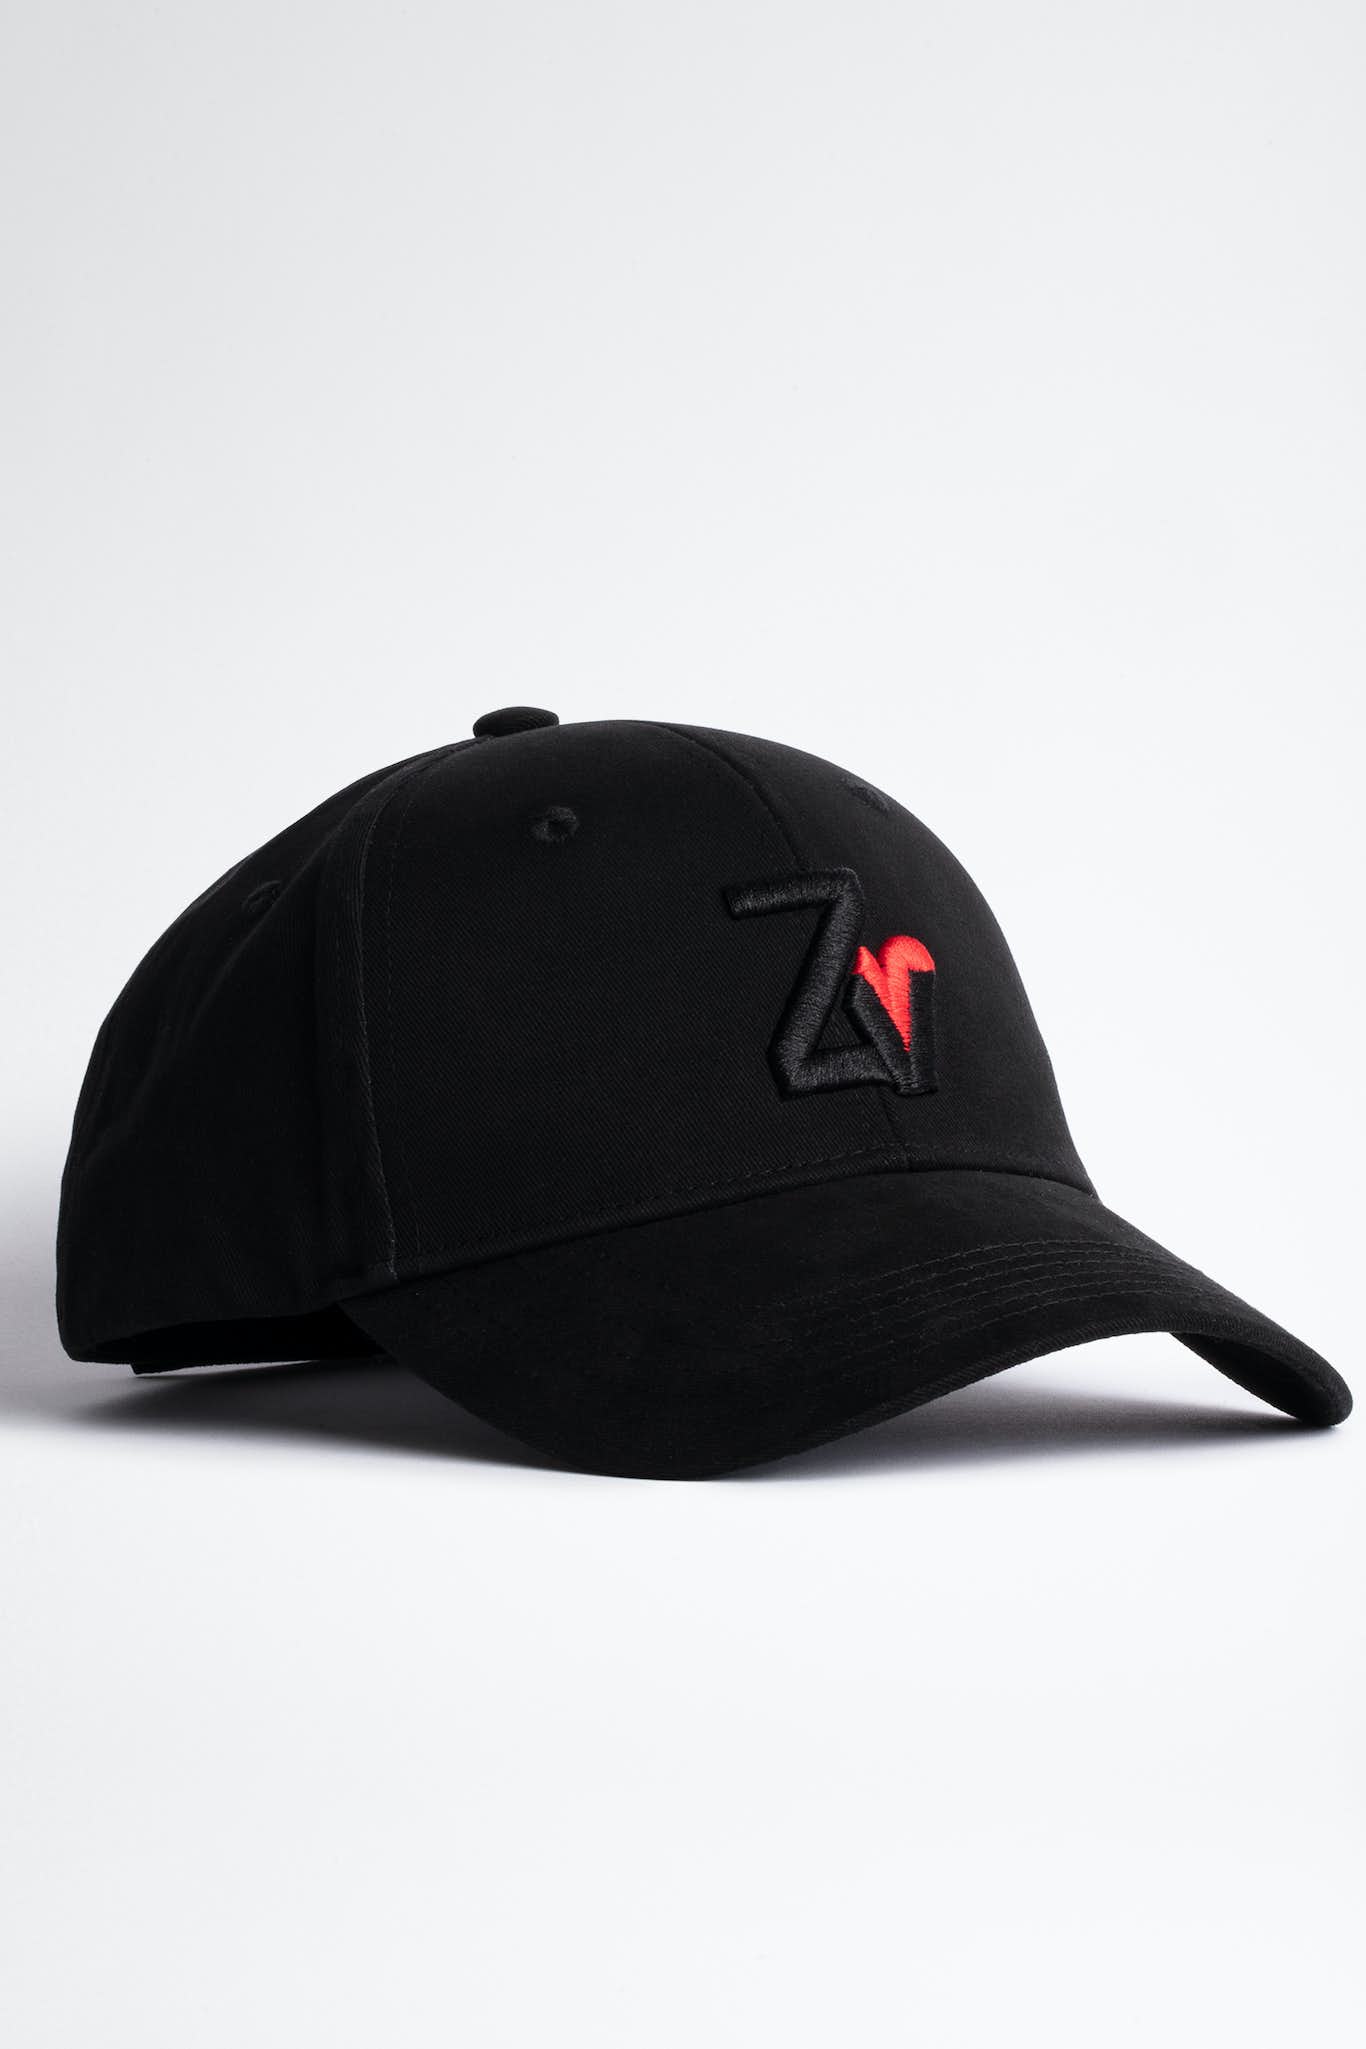 Embroidered-logo baseball cap, black